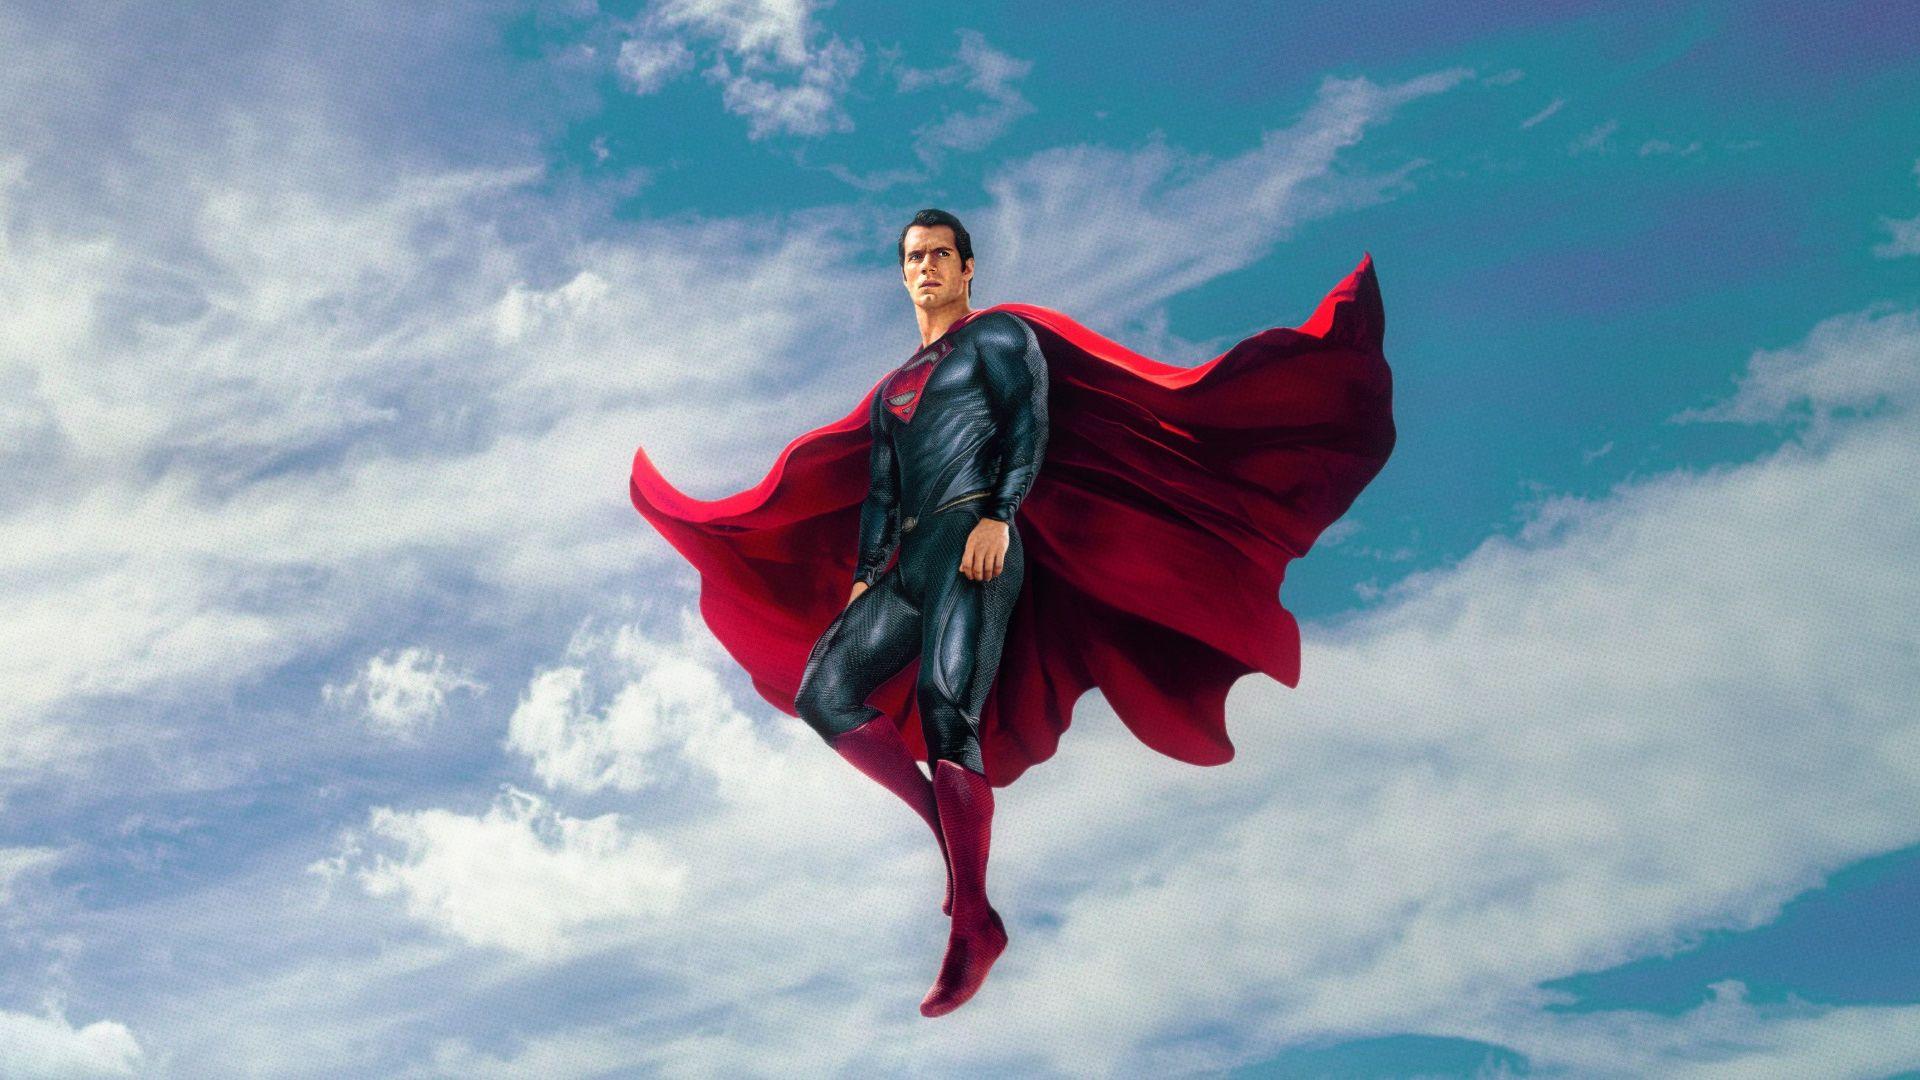 HD Superman Justice League Movie 2017